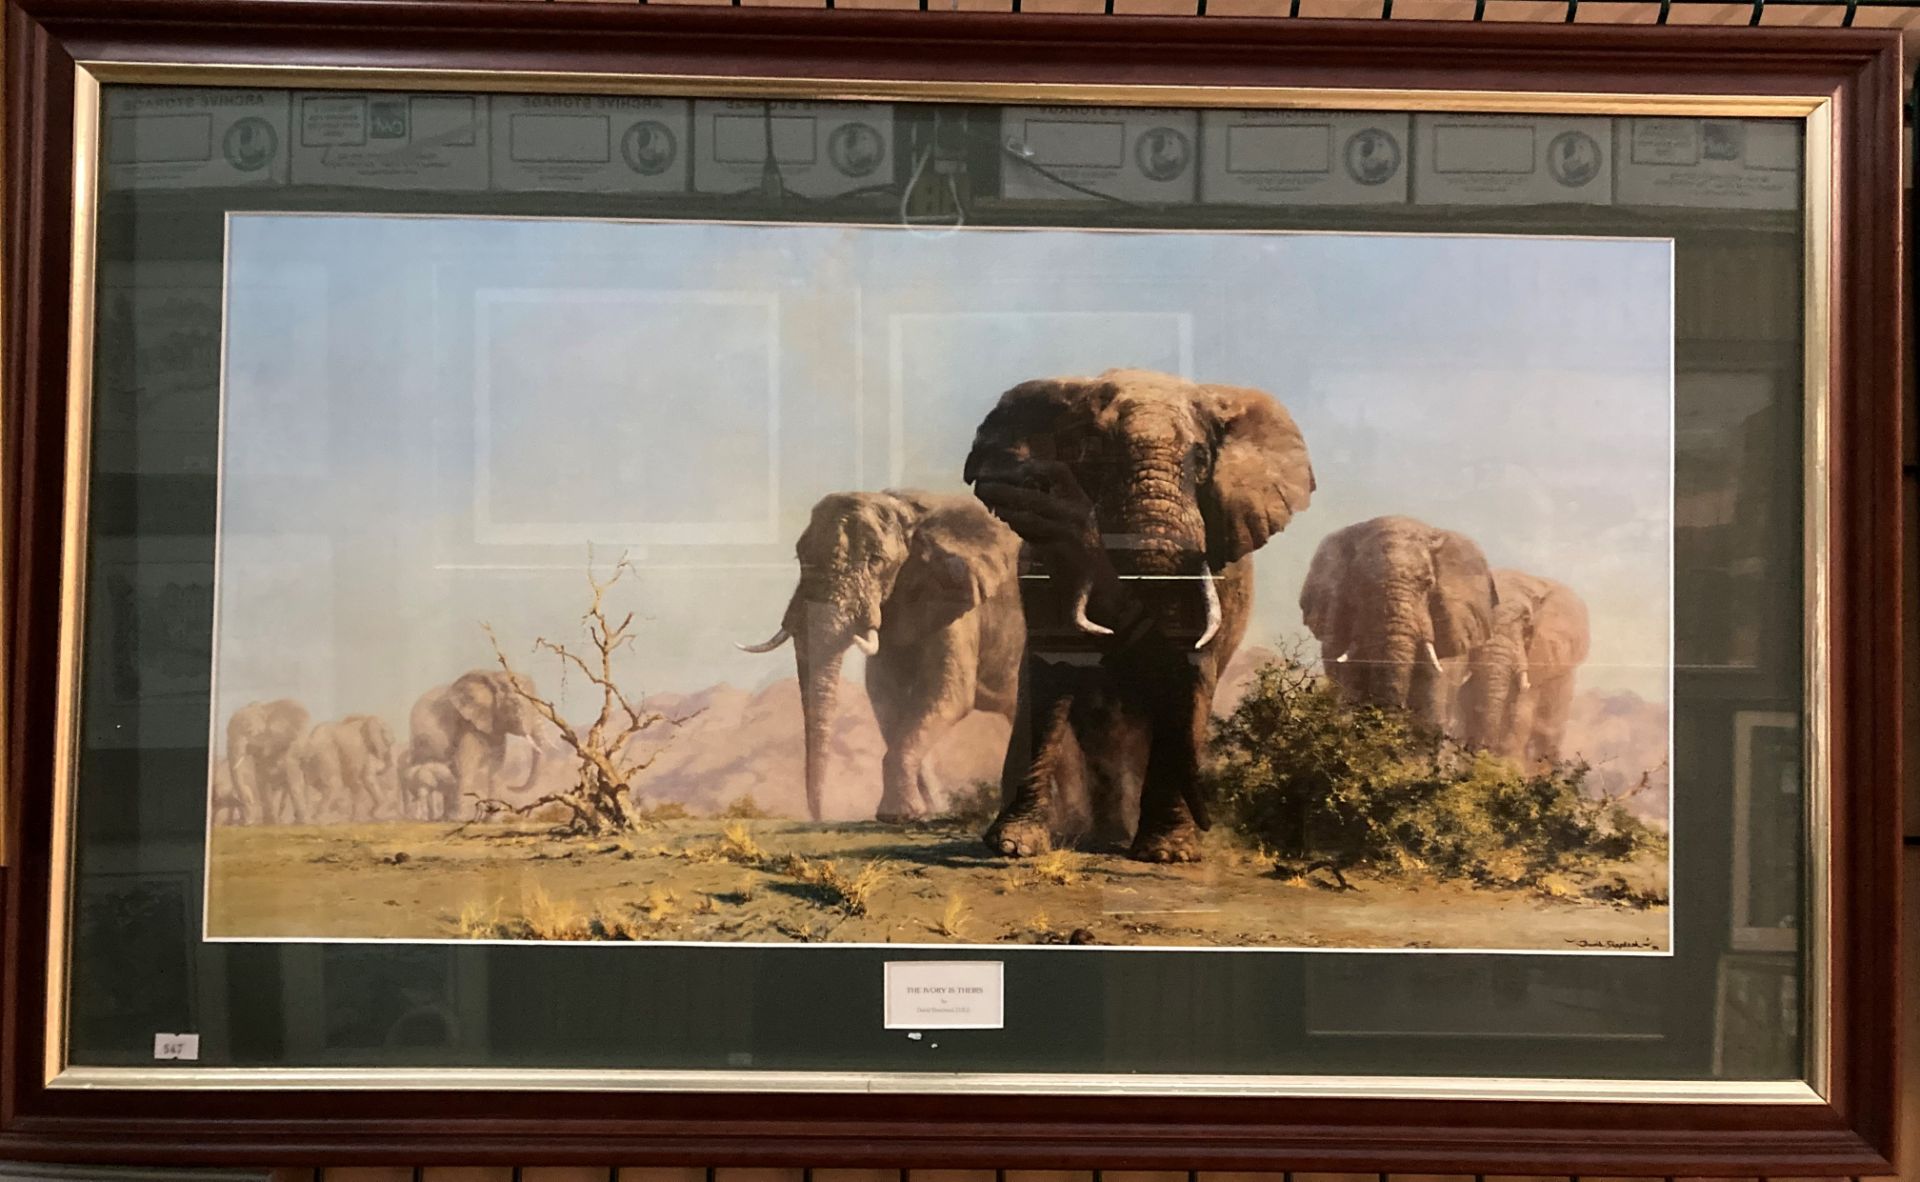 'David Shepherd OBE' - 'The Ivory is Theirs' framed art print 37 x 75cm